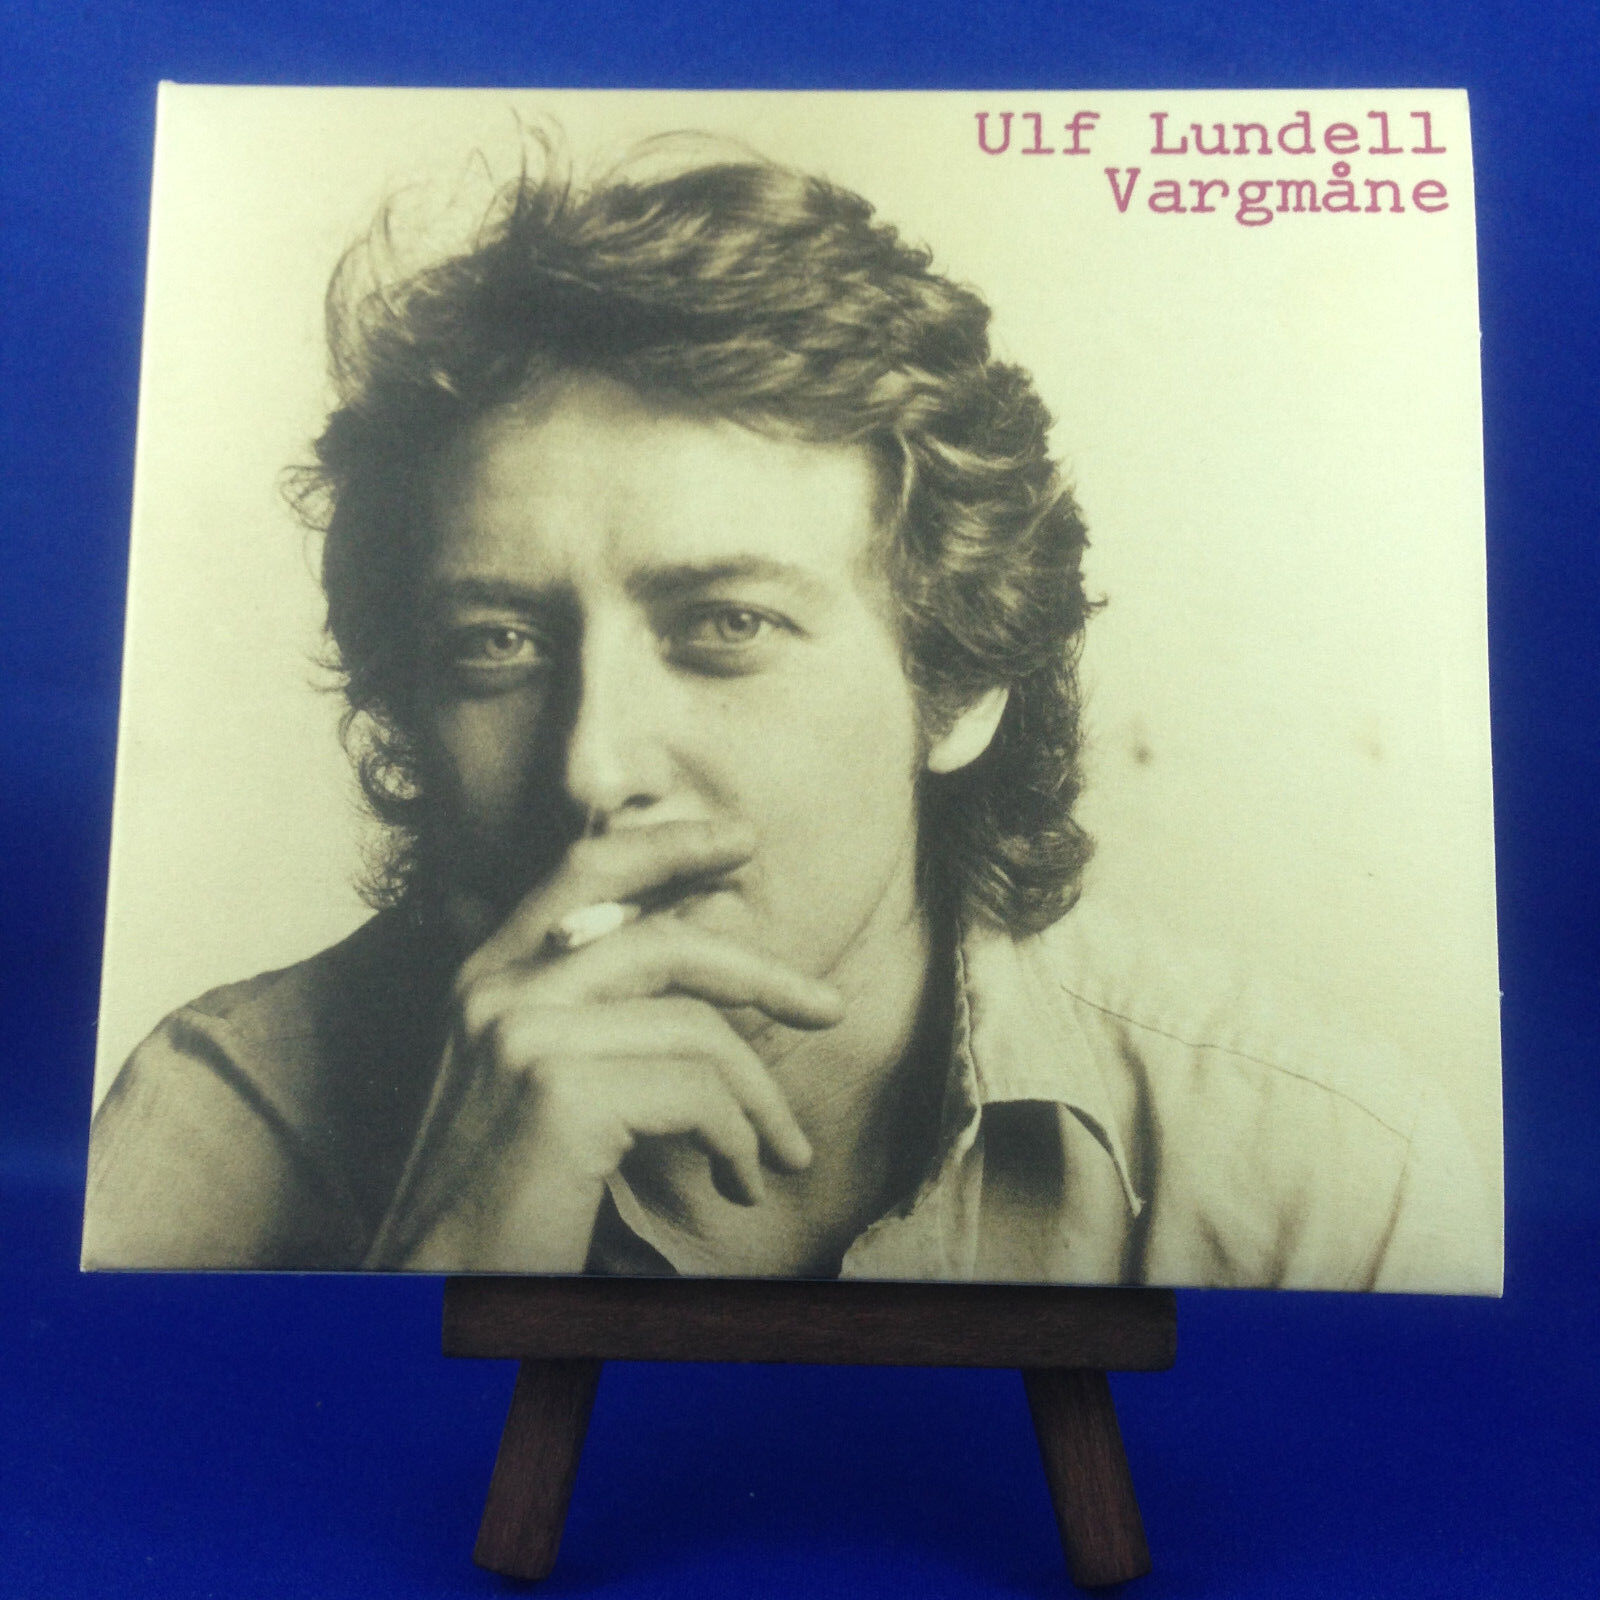 ULF LUNDELL: Vargmane (ULTRA RARE 2000 Swedish Ltd Edit Import Deluxe Re-Issue)